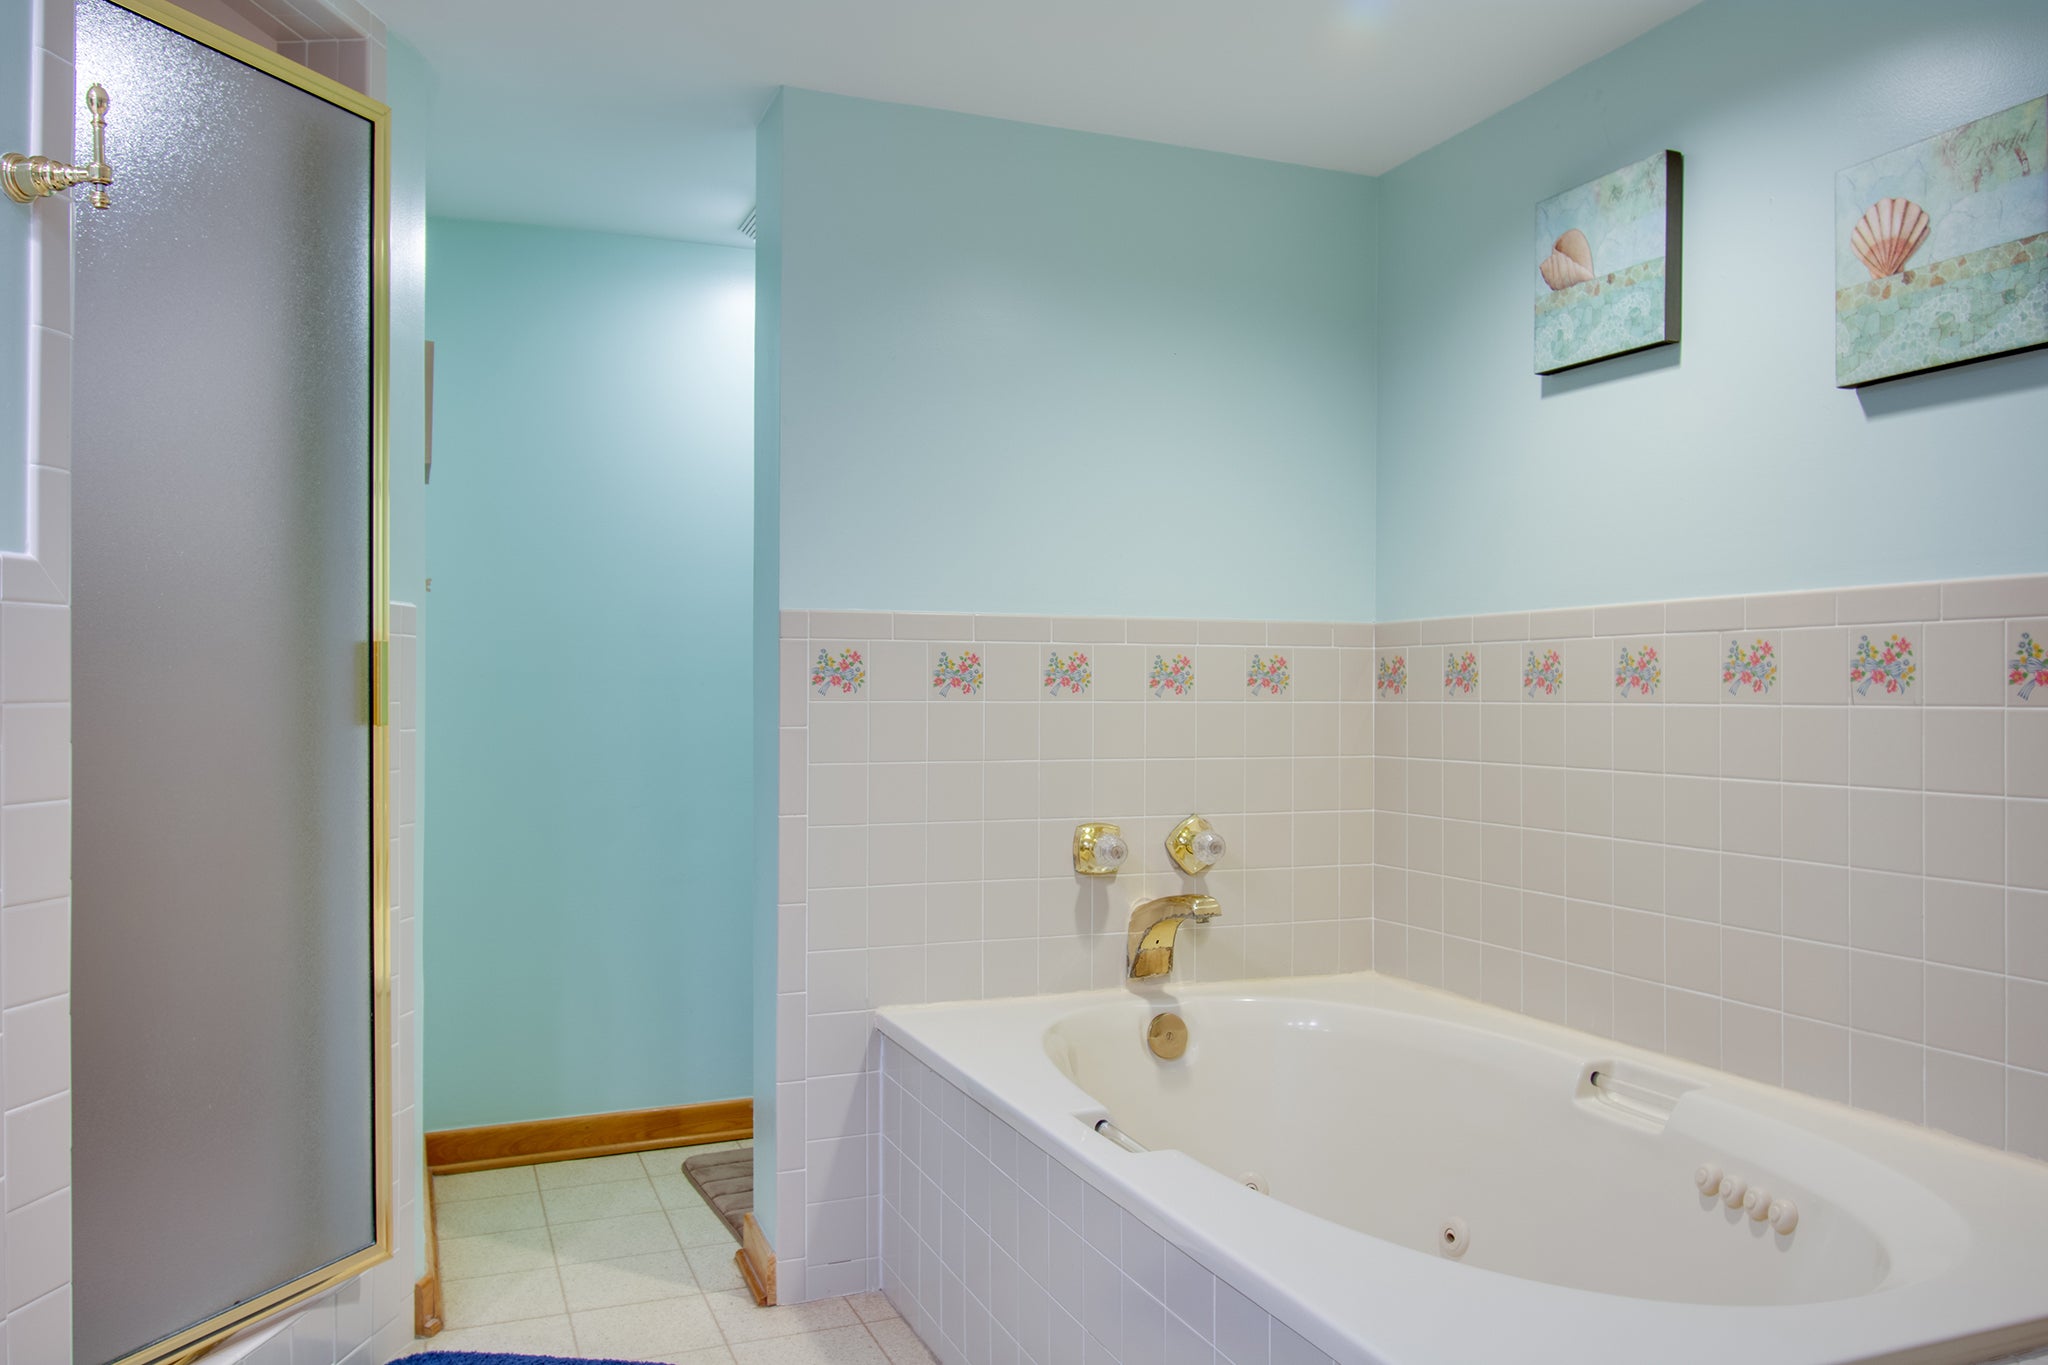 H202S: Heron Cove 202S | Bedroom 1 Private Bath